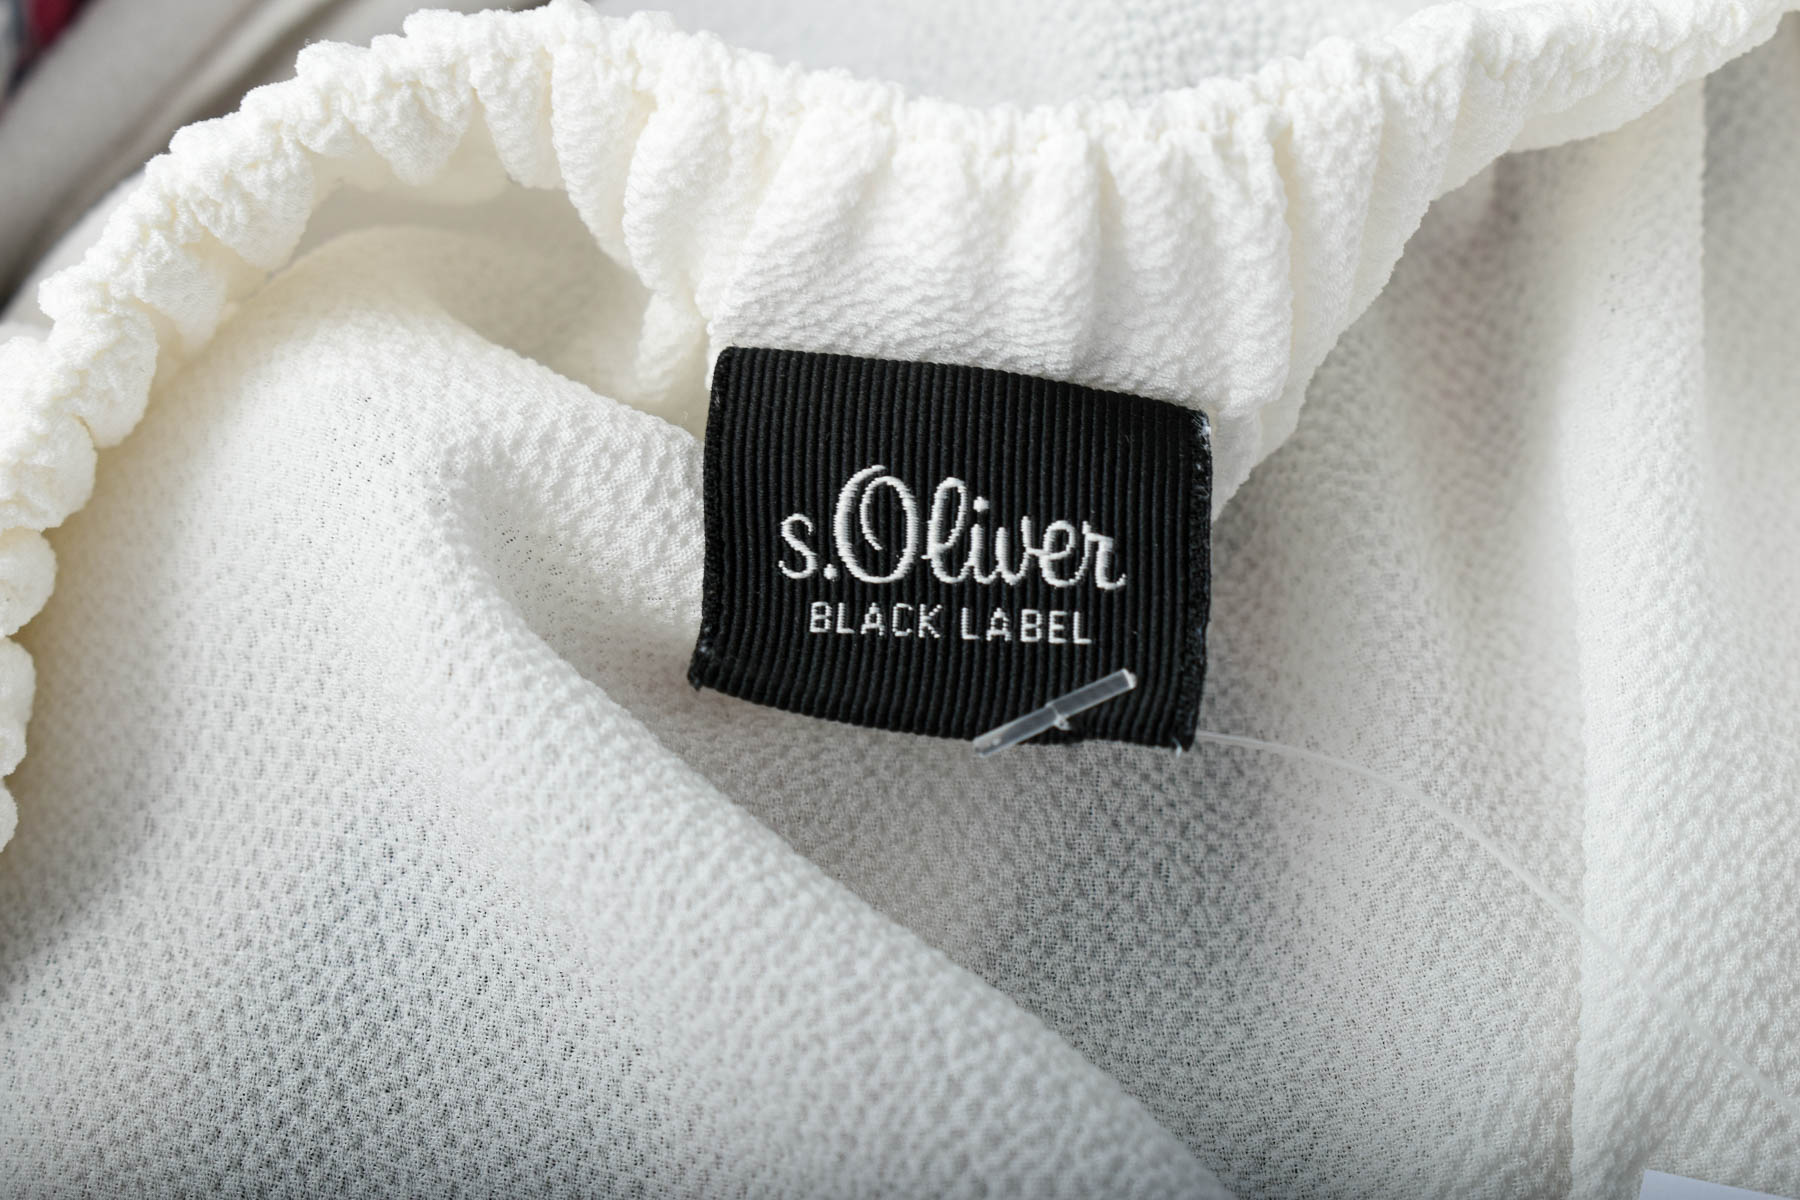 Women's shirt - S.Oliver - 2